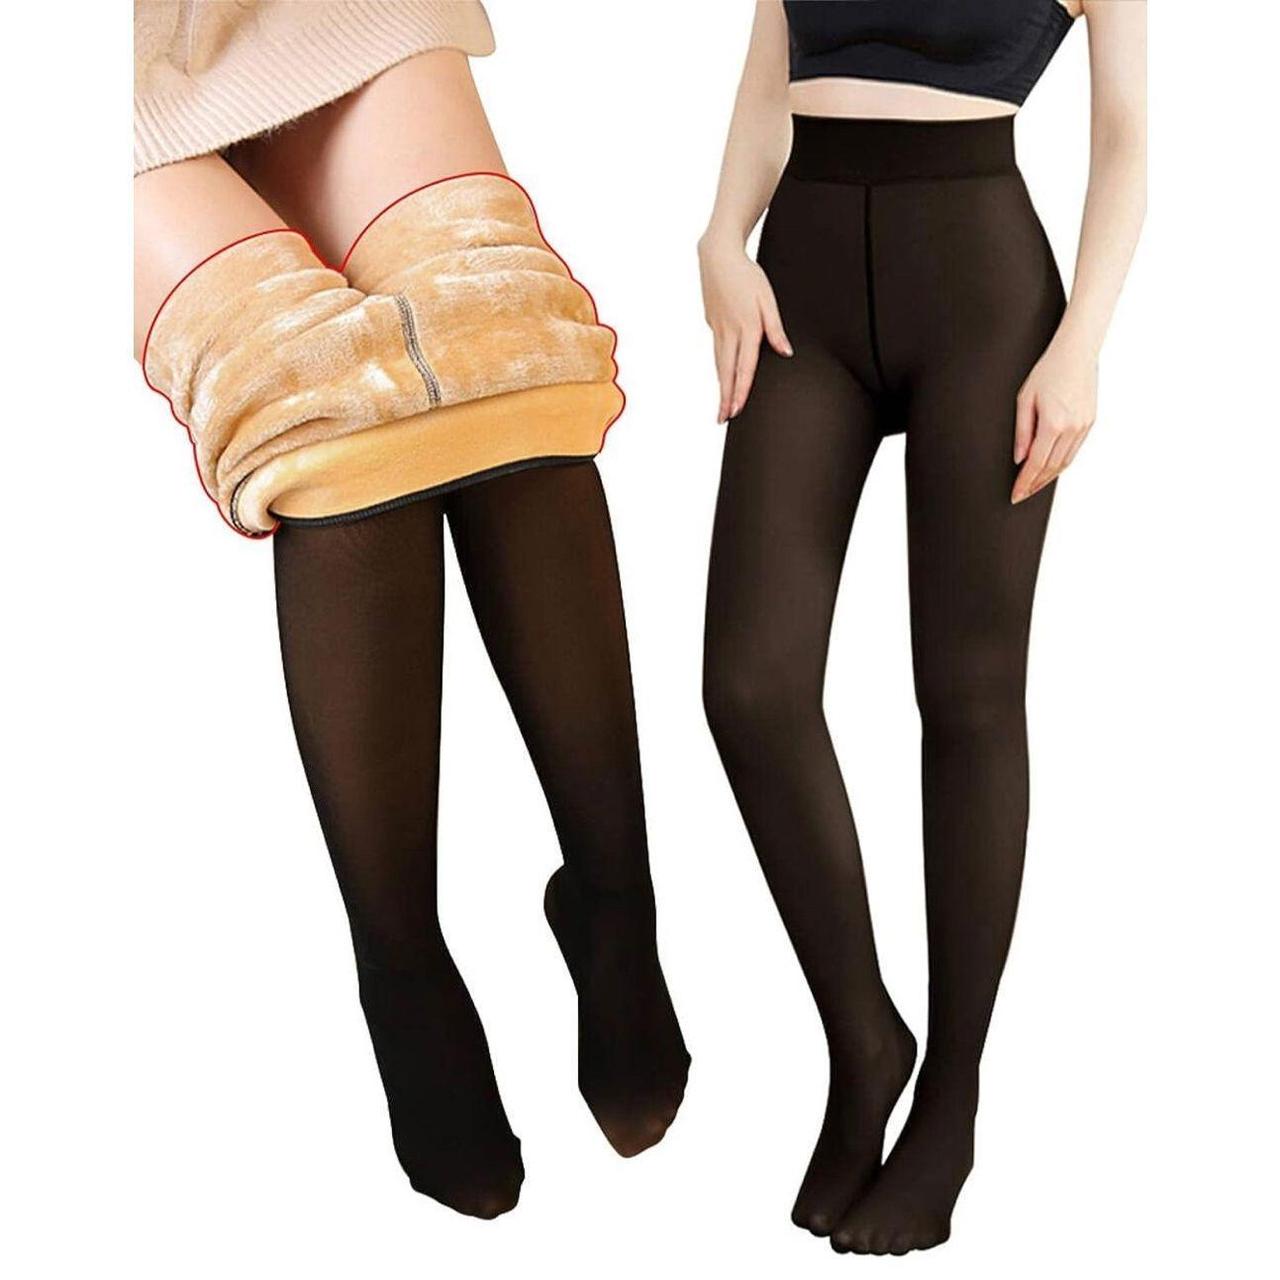 shosho leggings fits s/m patterned black/white, - Depop